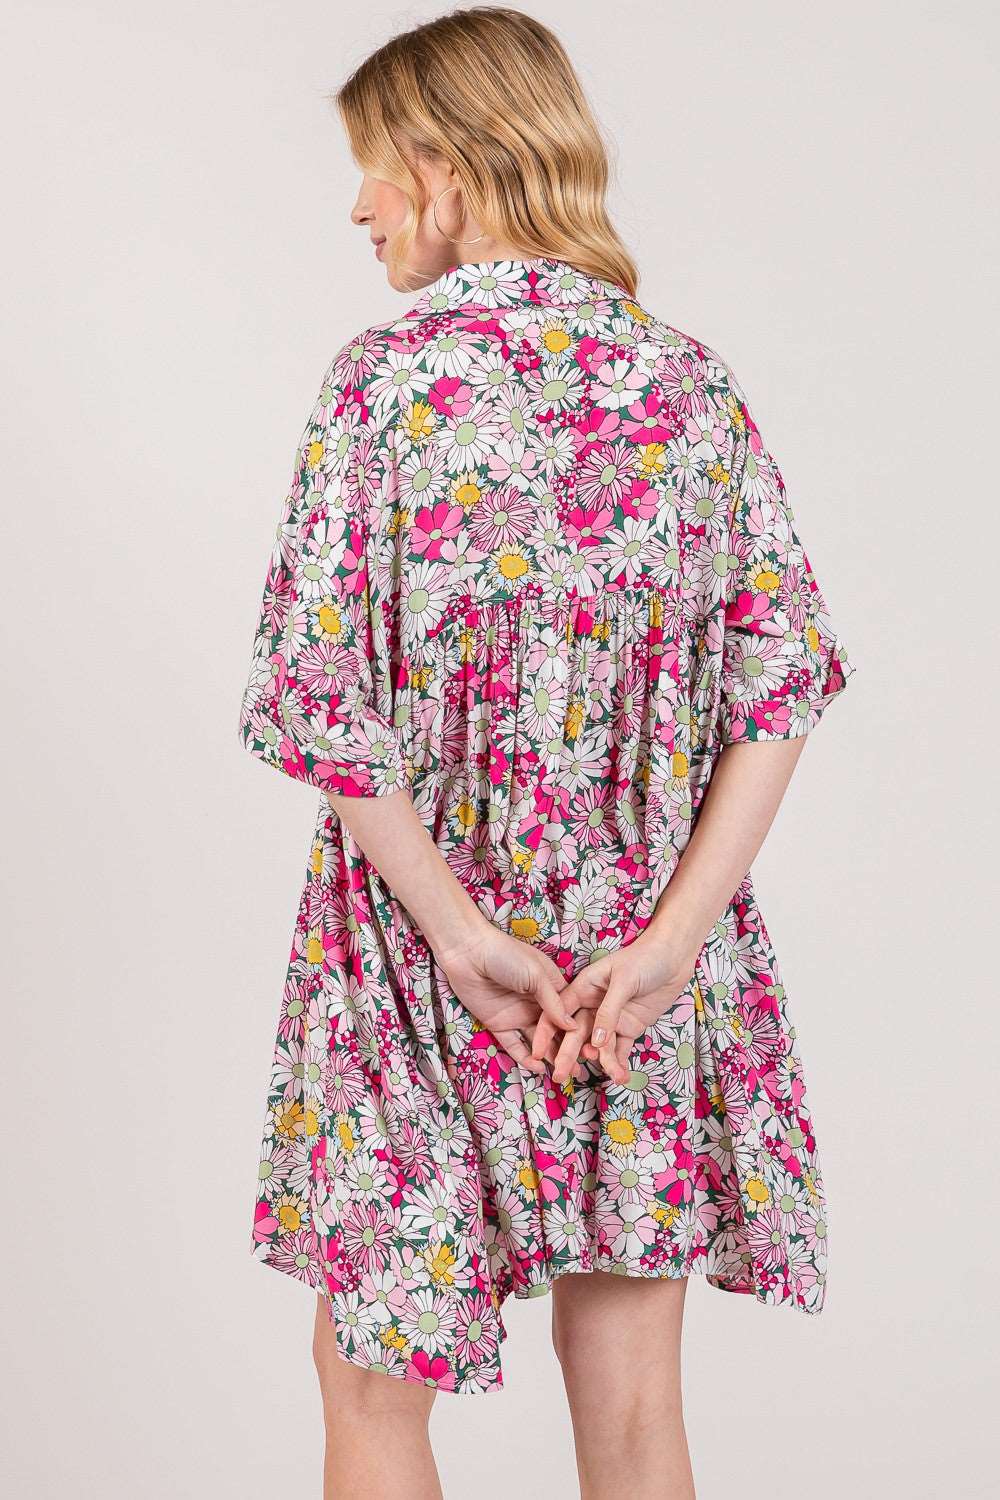 A SAGE + FIG Floral Button Down Mini Shirt Dress